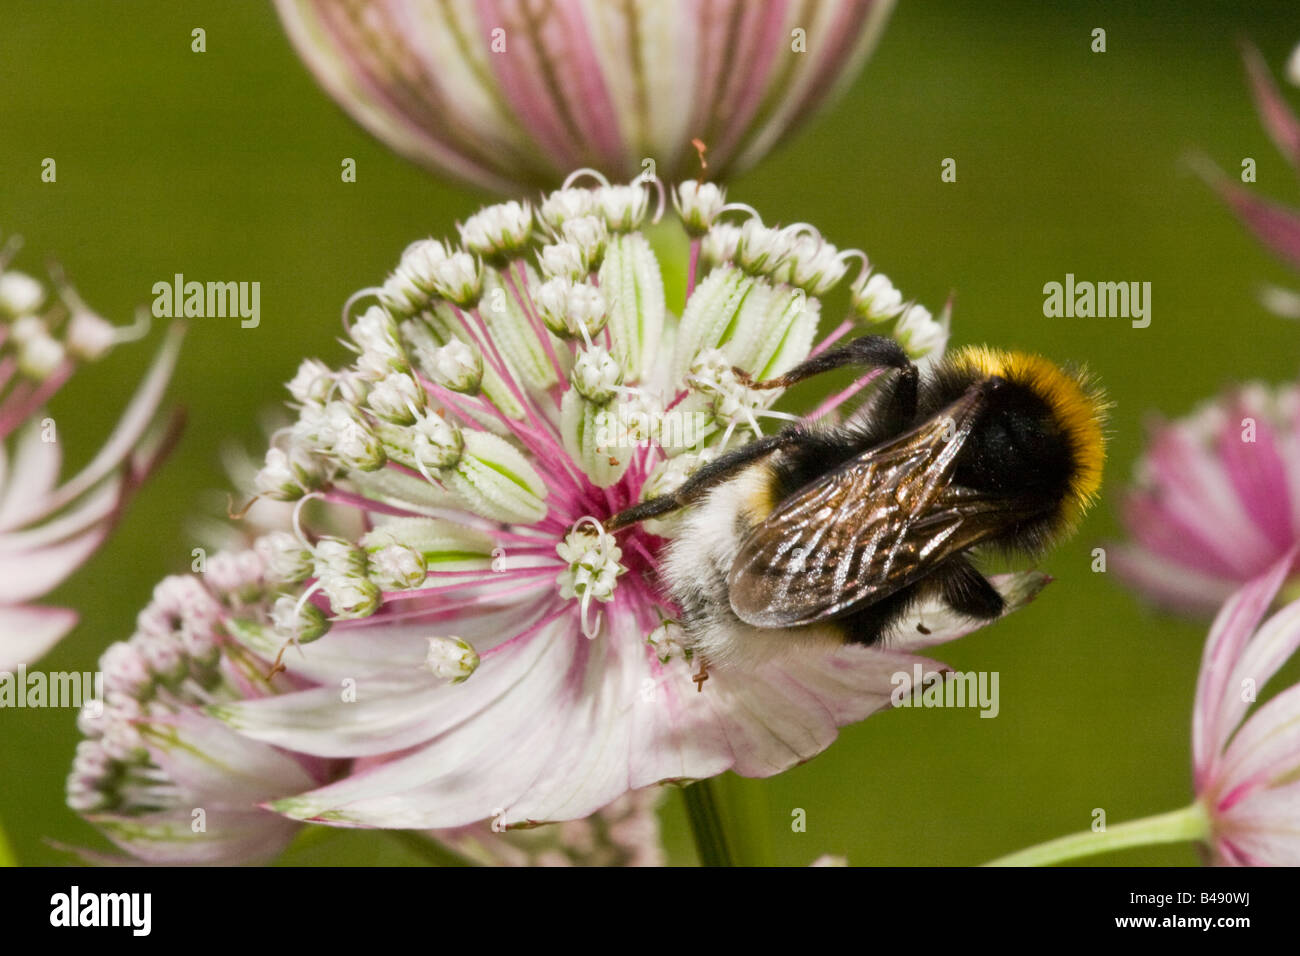 Bumblebee on Astrantia flower Stock Photo